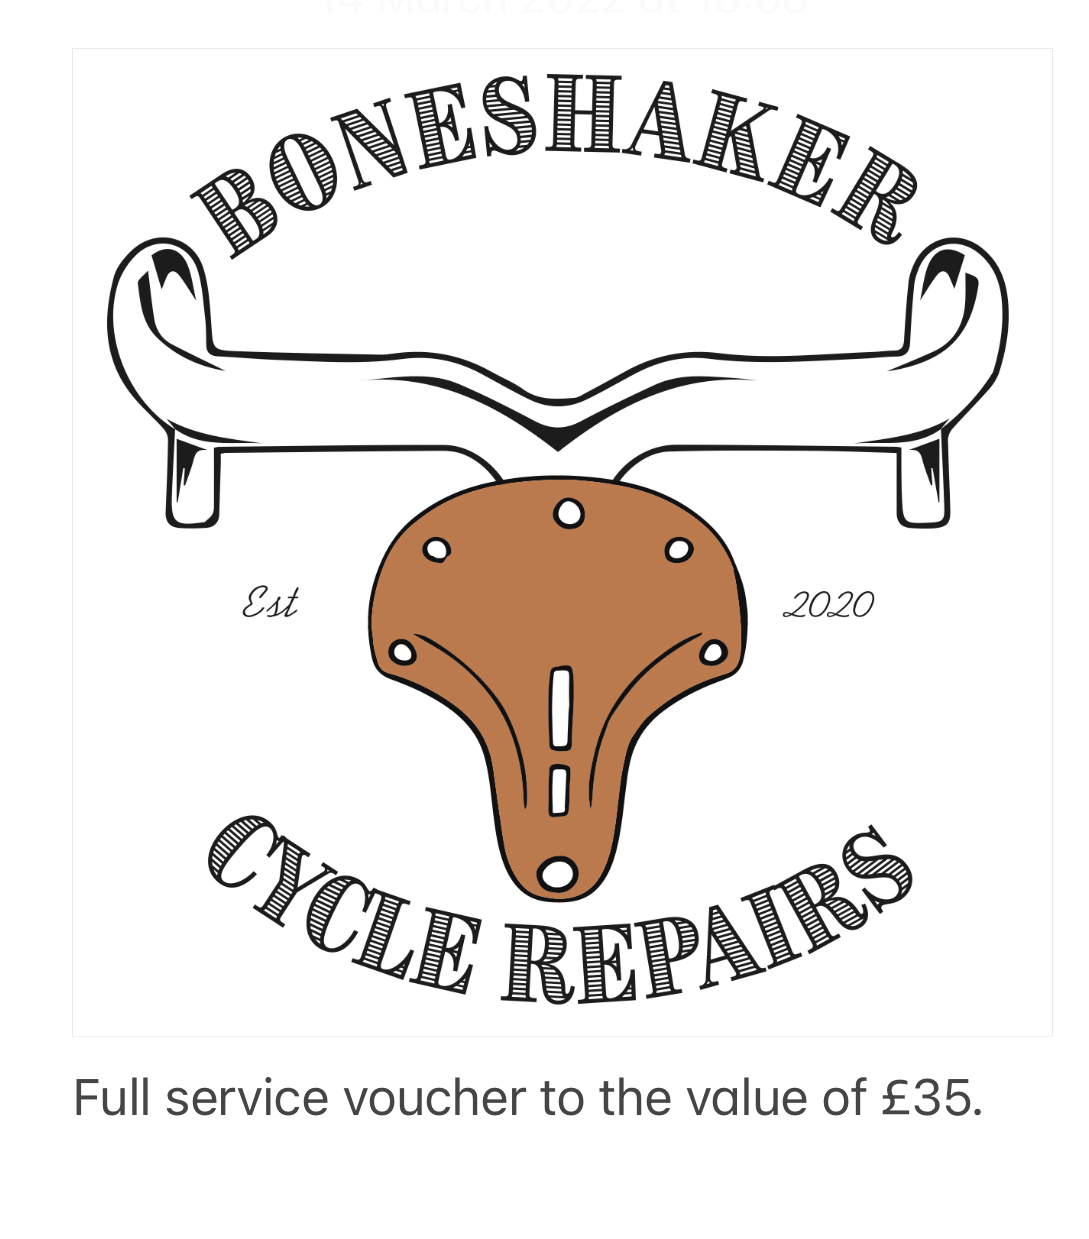 BONESHAKER CYCLE REPAIRS